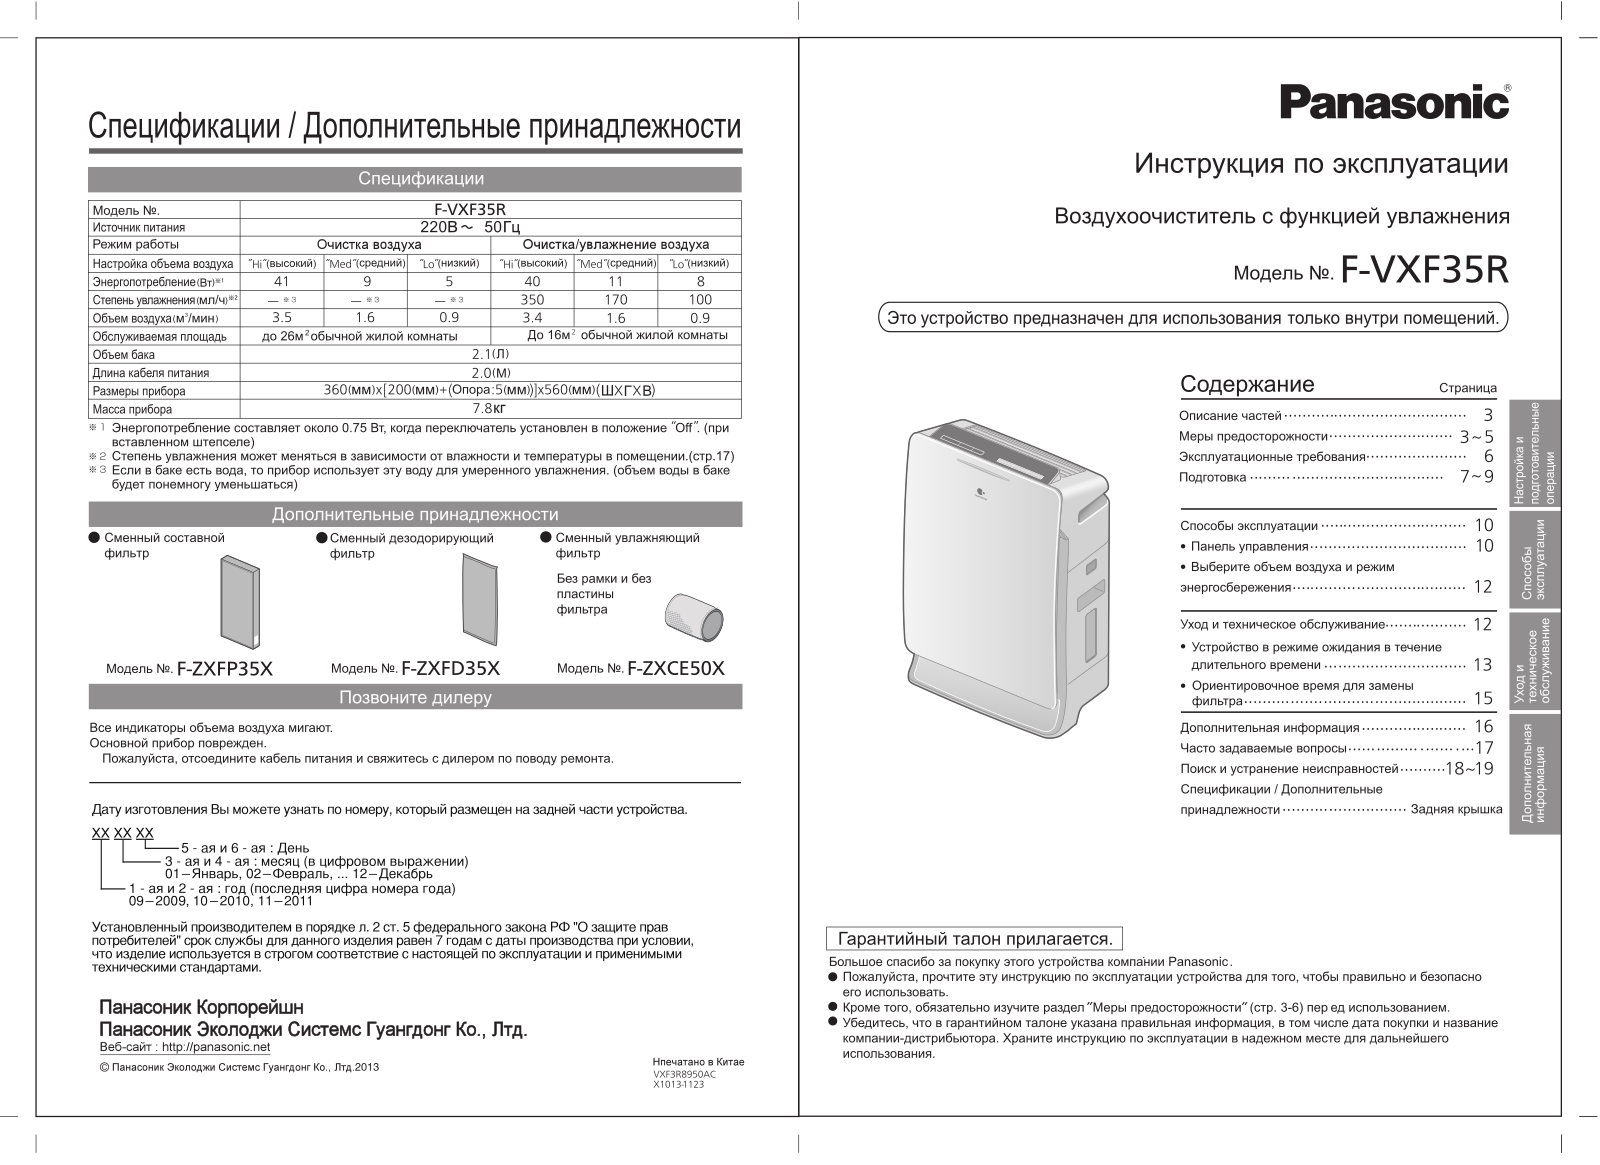 Panasonic F-VXF35R User Manual